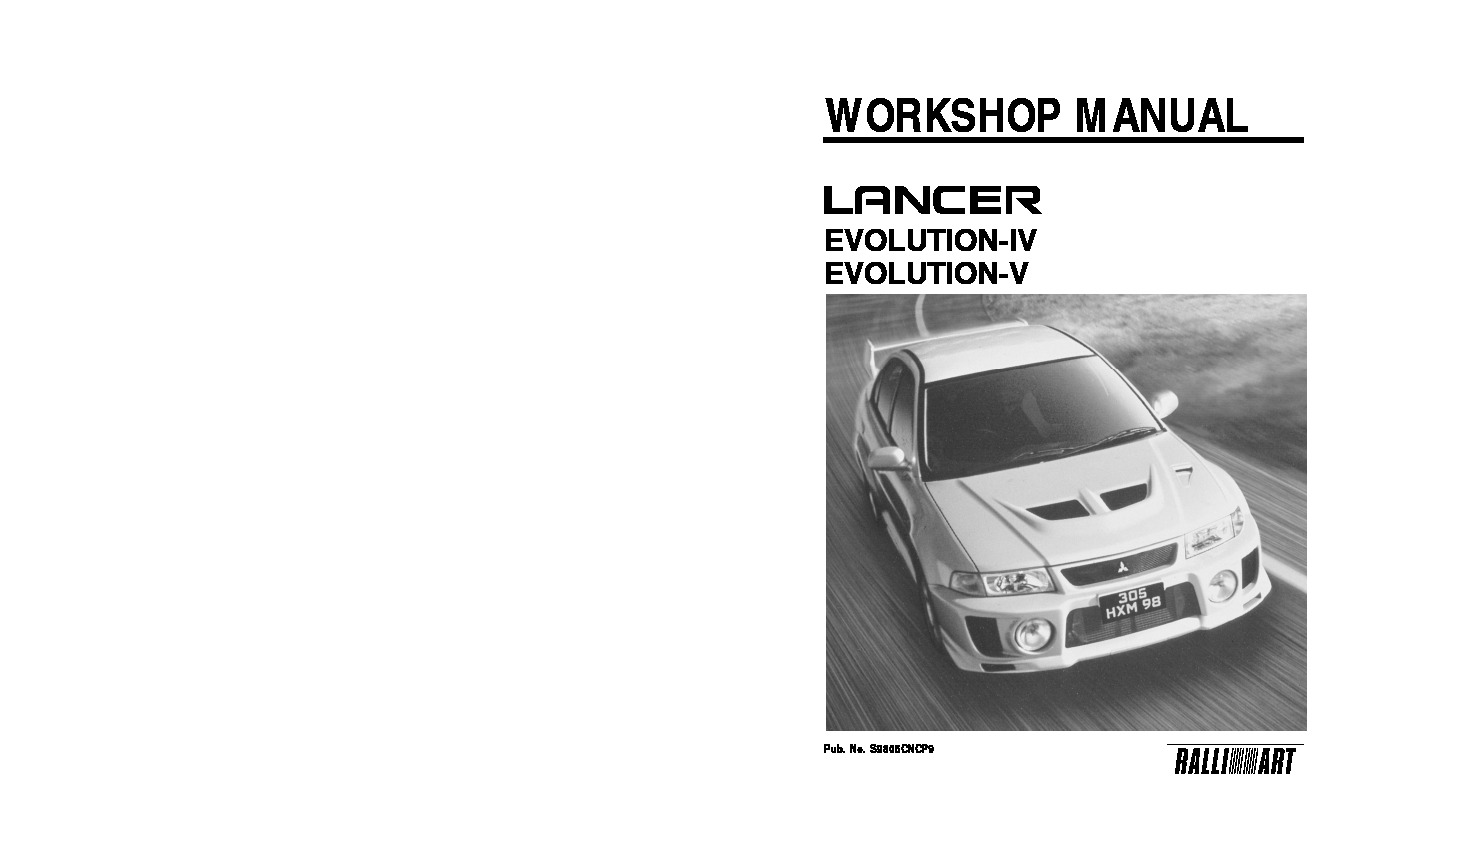 1998_mitsubishi_lancer_evo4and5_manual.pdf